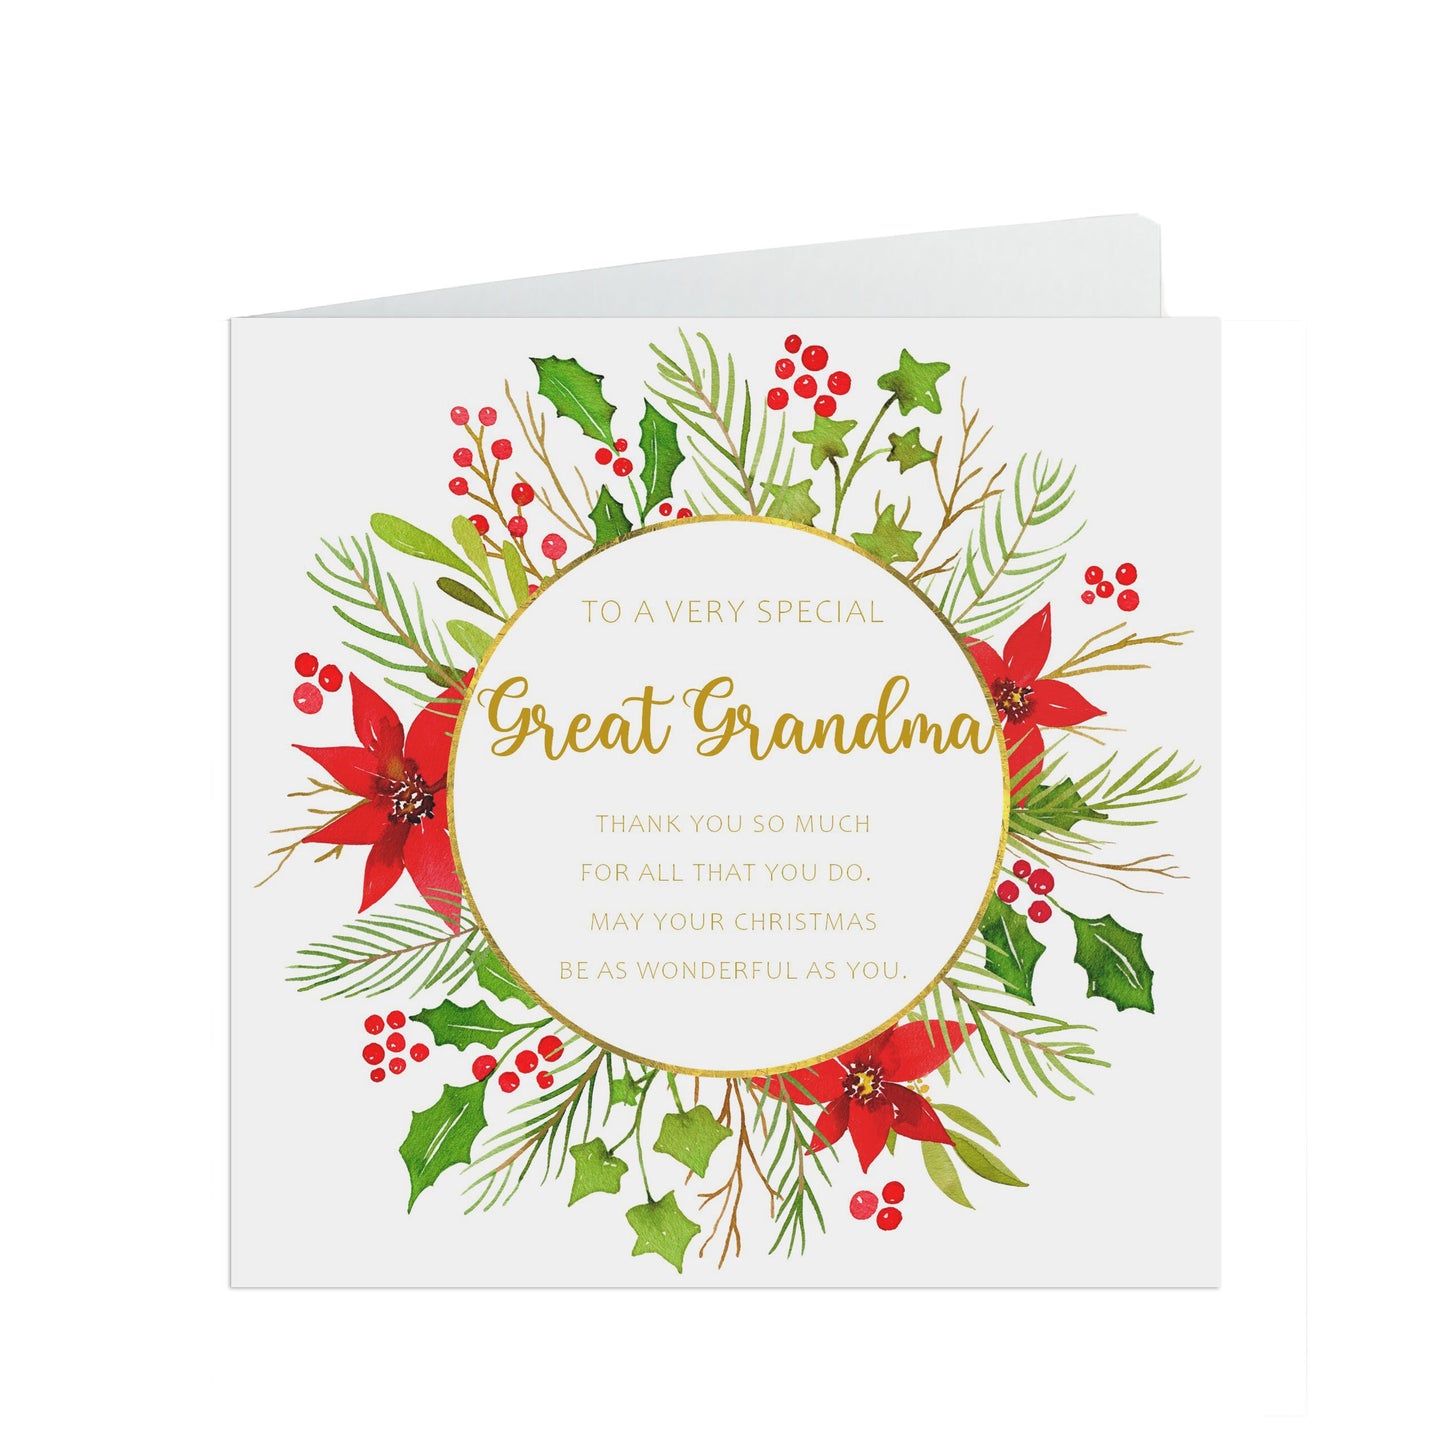 Great Grandma Christmas Card, Traditional Poinsettia Design